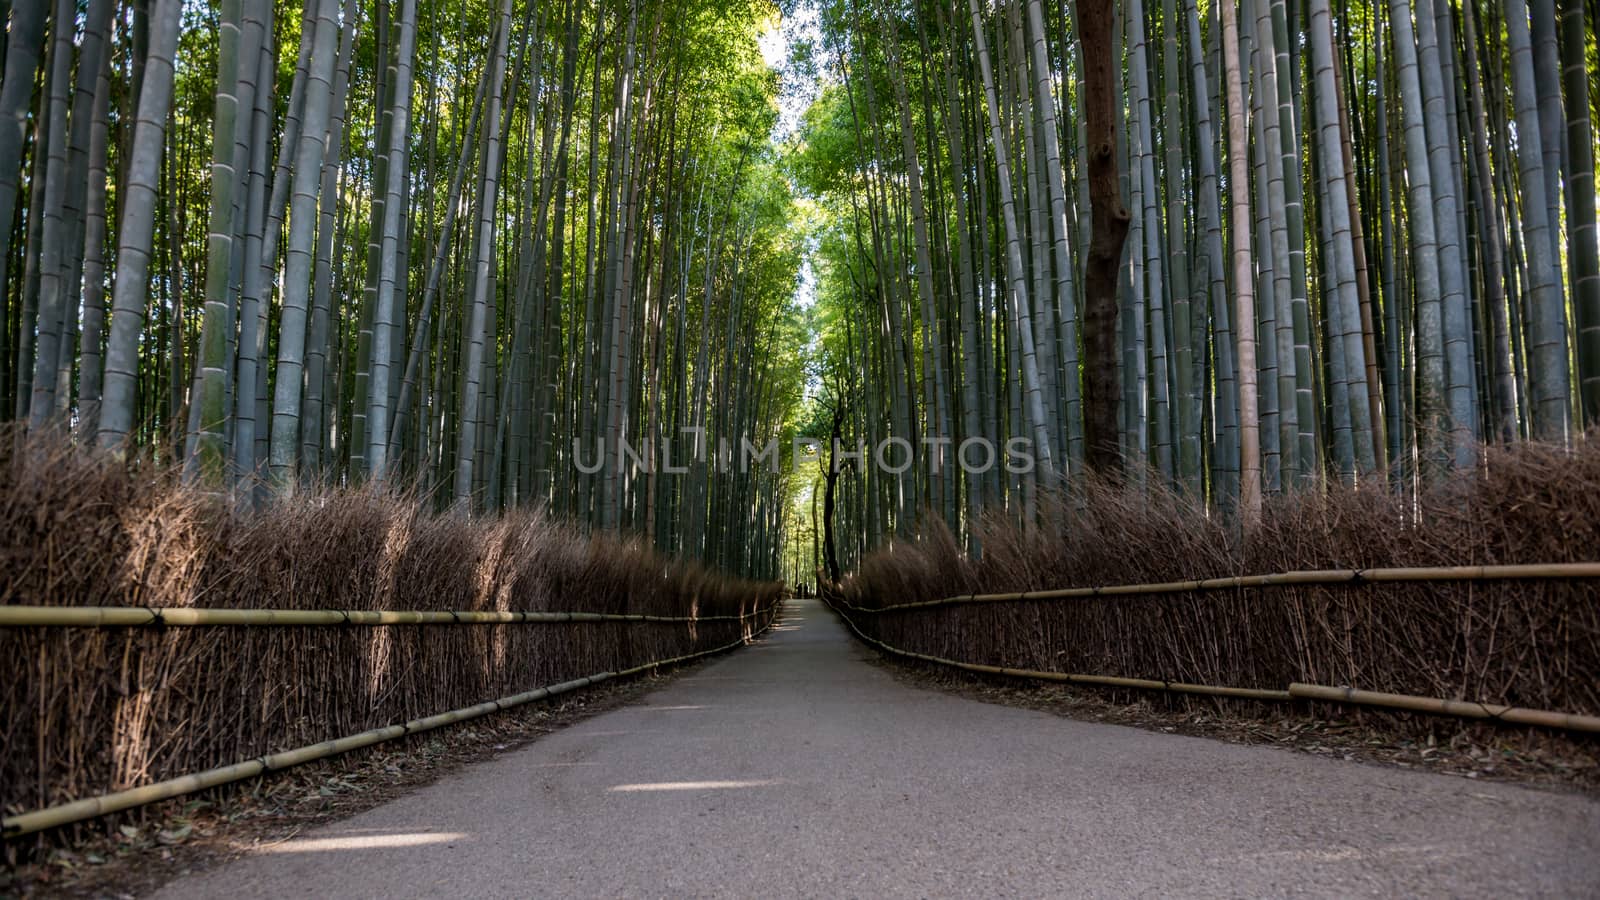 Path to bamboo forest, Arashiyama, Kyoto, Japan  by chanwity